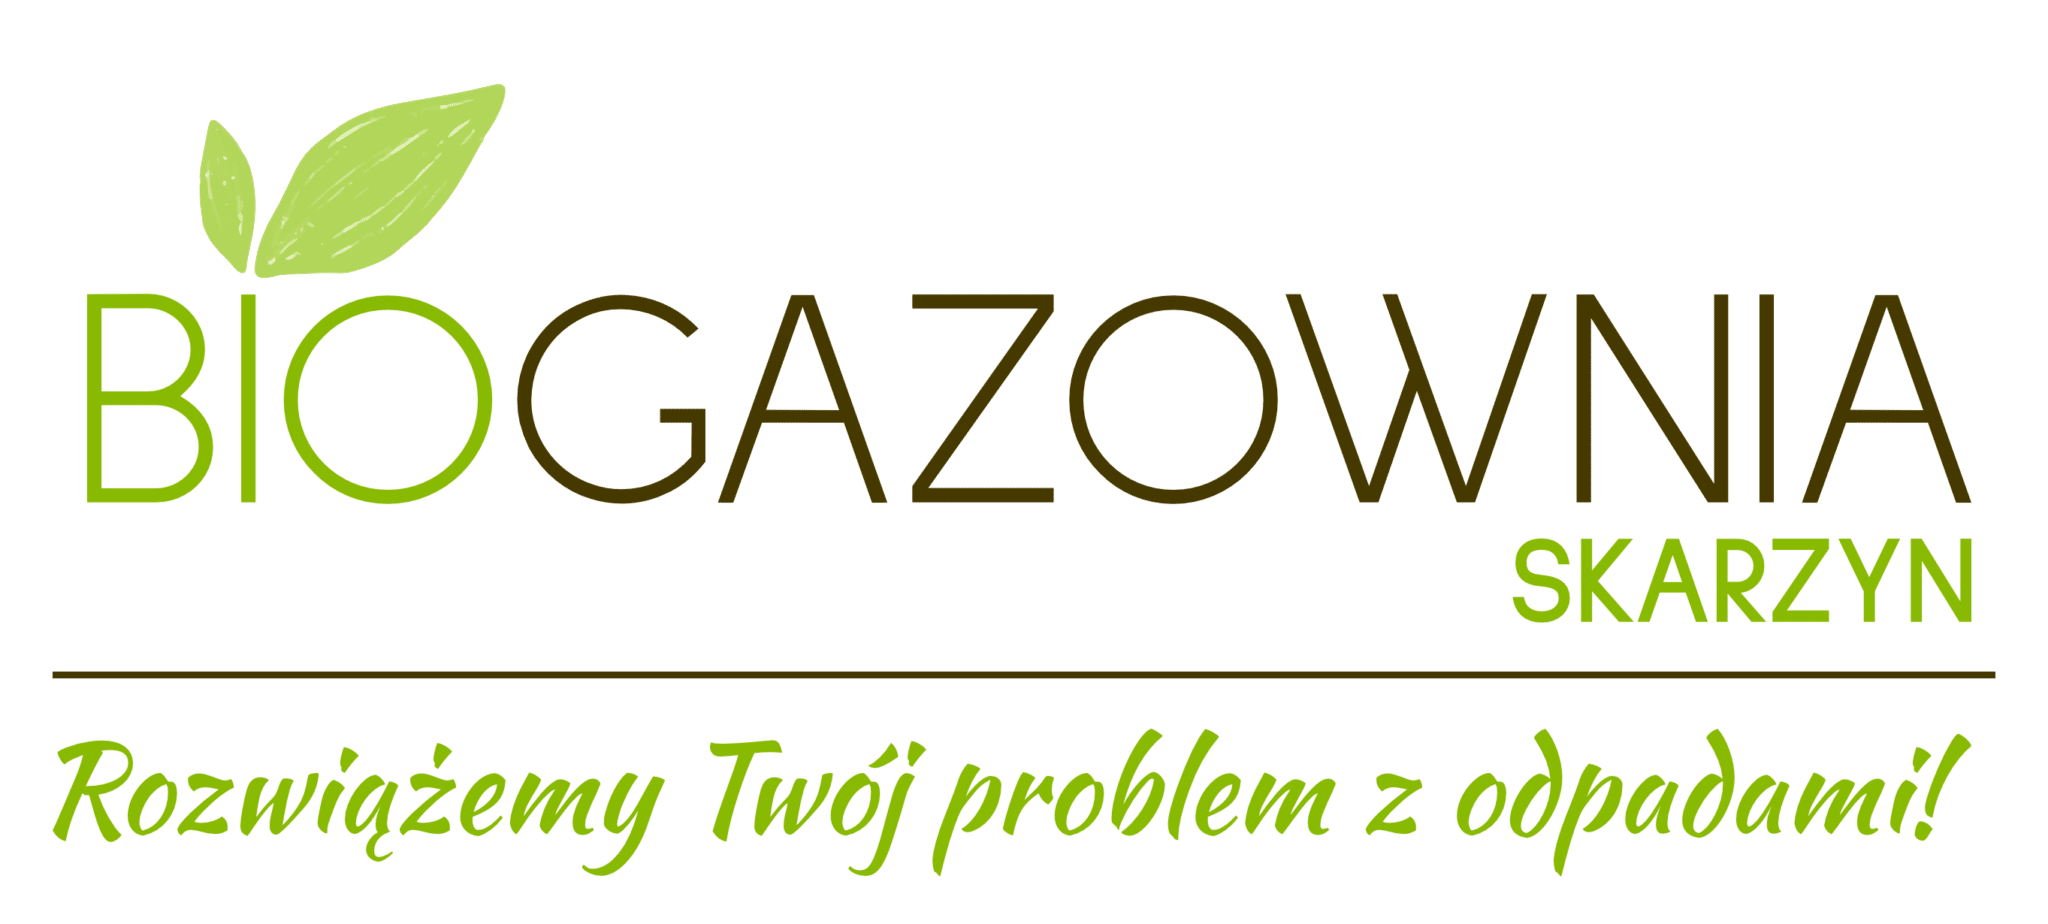 BioGazownia Skarzyn